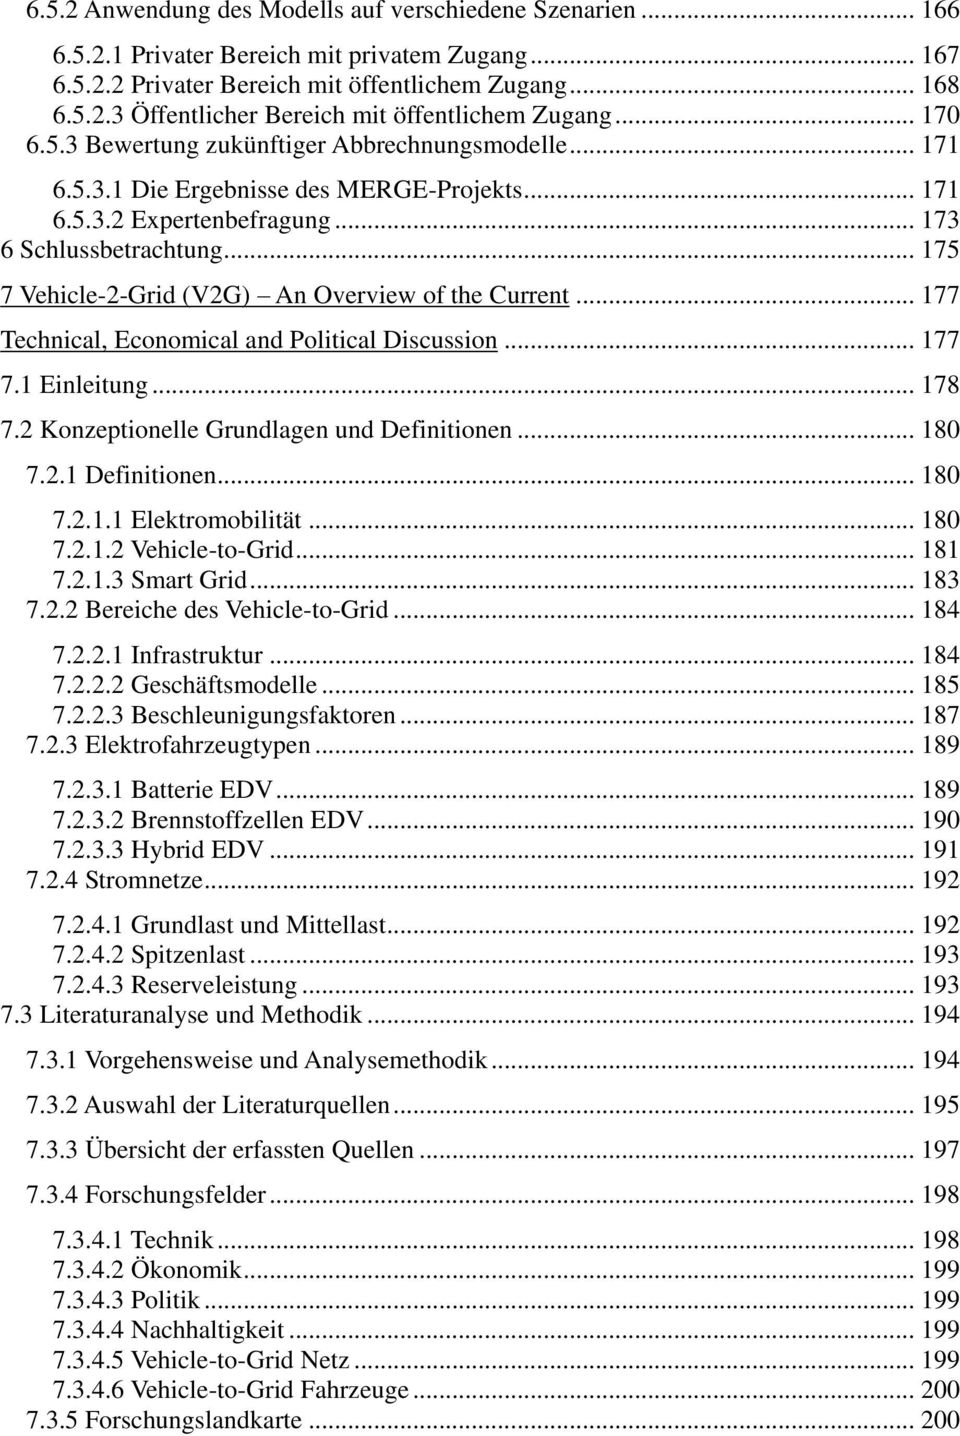 .. 175 7 Vehicle-2-Grid (V2G) An Overview of the Current... 177 Technical, Economical and Political Discussion... 177 7.1 Einleitung... 178 7.2 Konzeptionelle Grundlagen und Definitionen... 180 7.2.1 Definitionen.